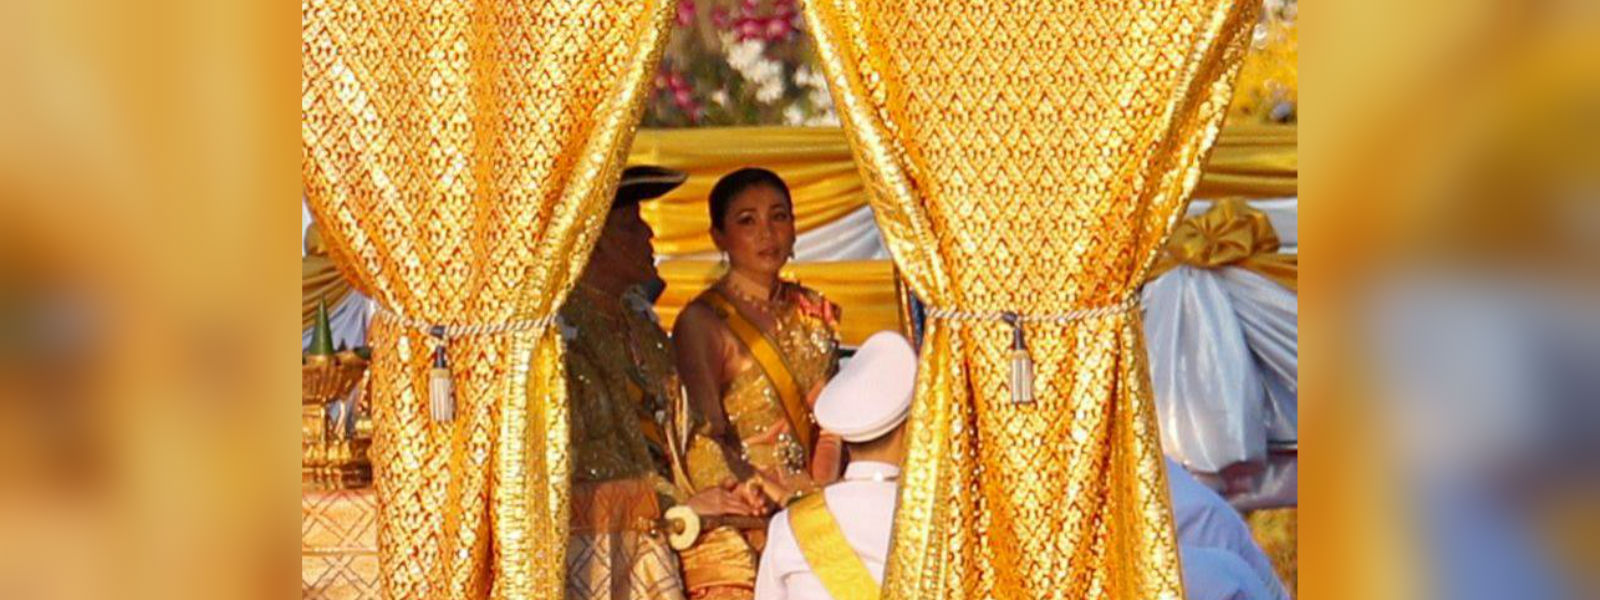 Thai king completes coronation year 